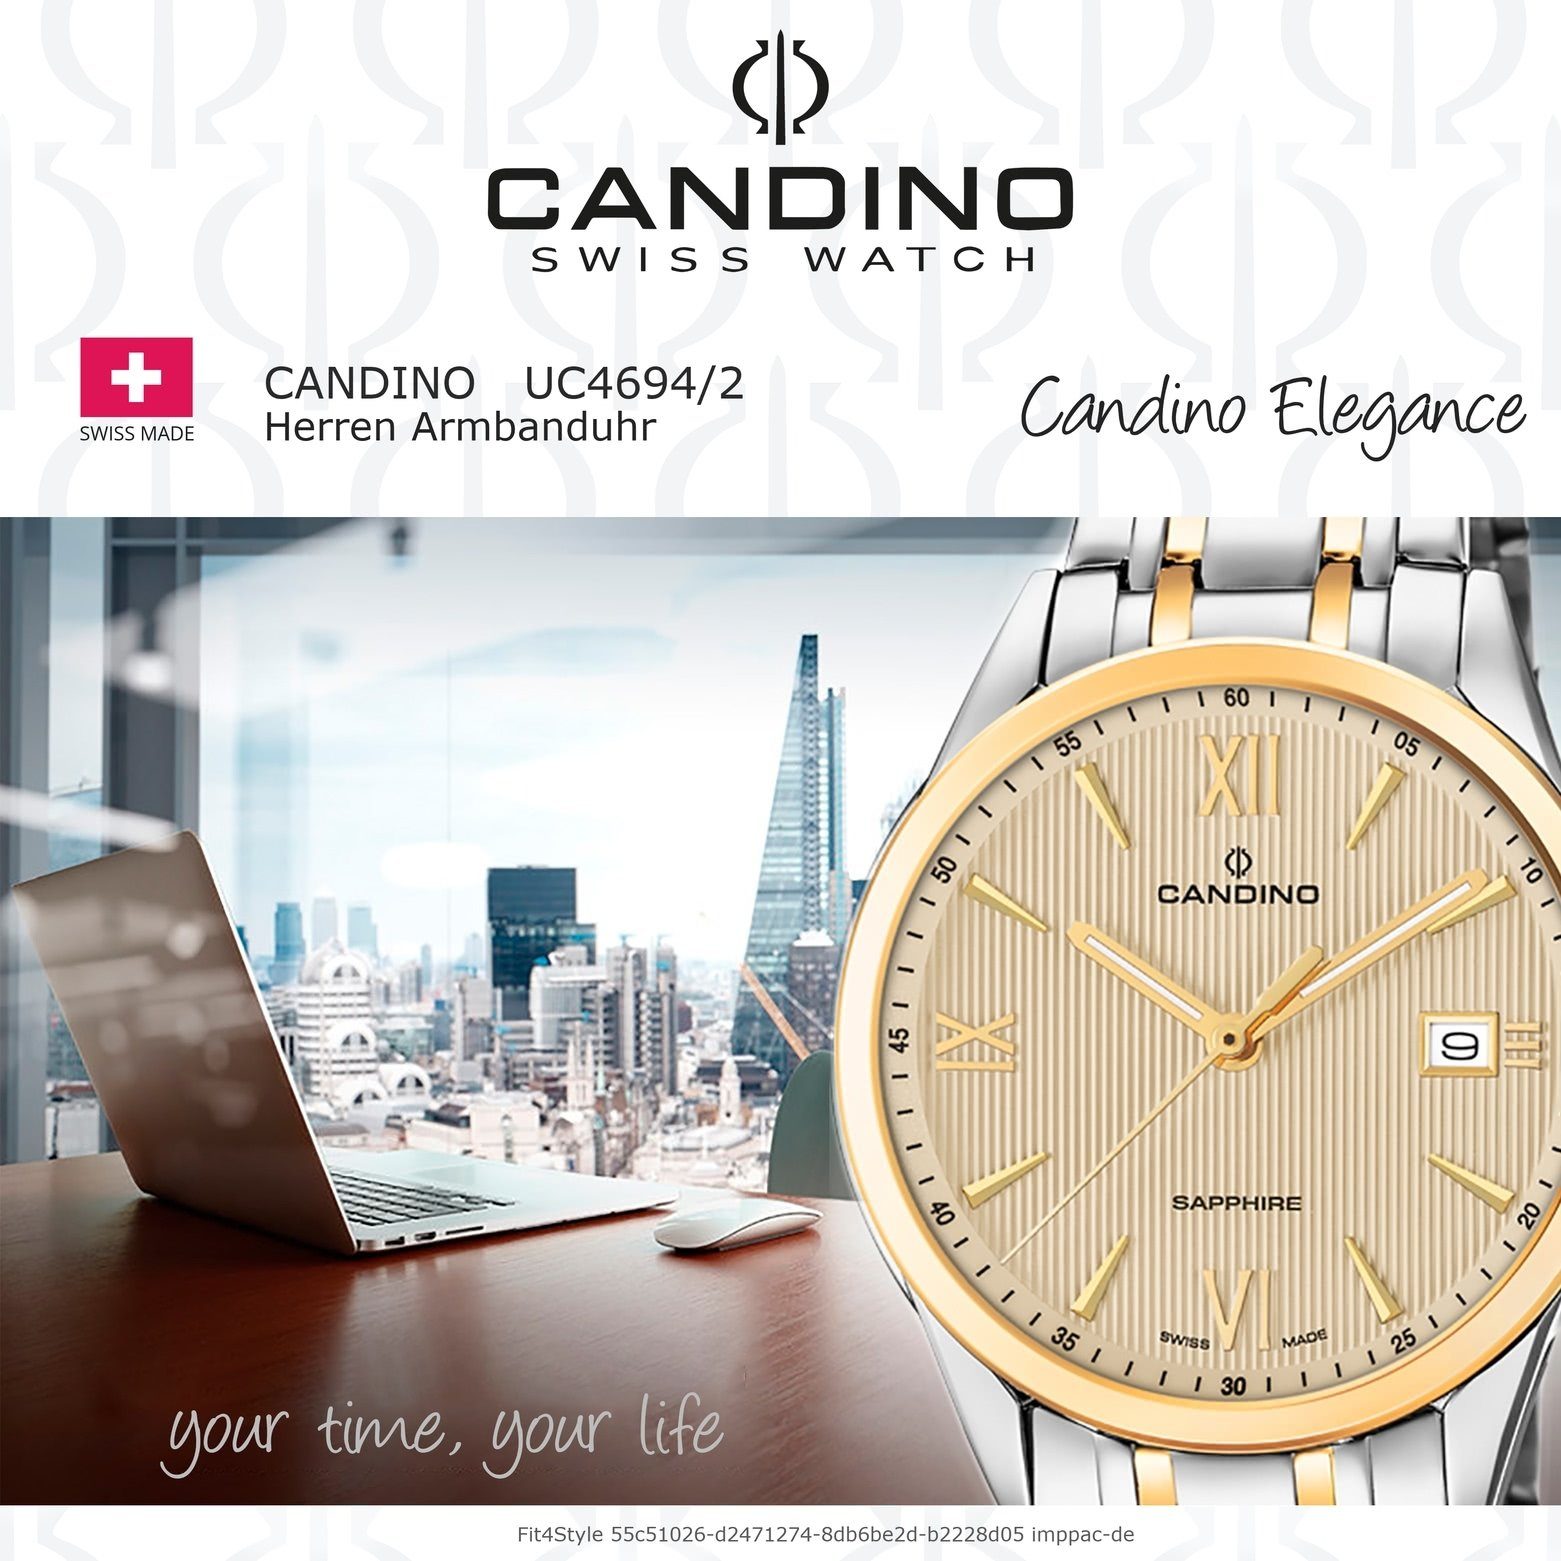 Edelstahlarmband Uhr Quarzuhr gold, Elegant rund, Candino Herren Armbanduhr Candino Herren C4694/2, Analog silber,